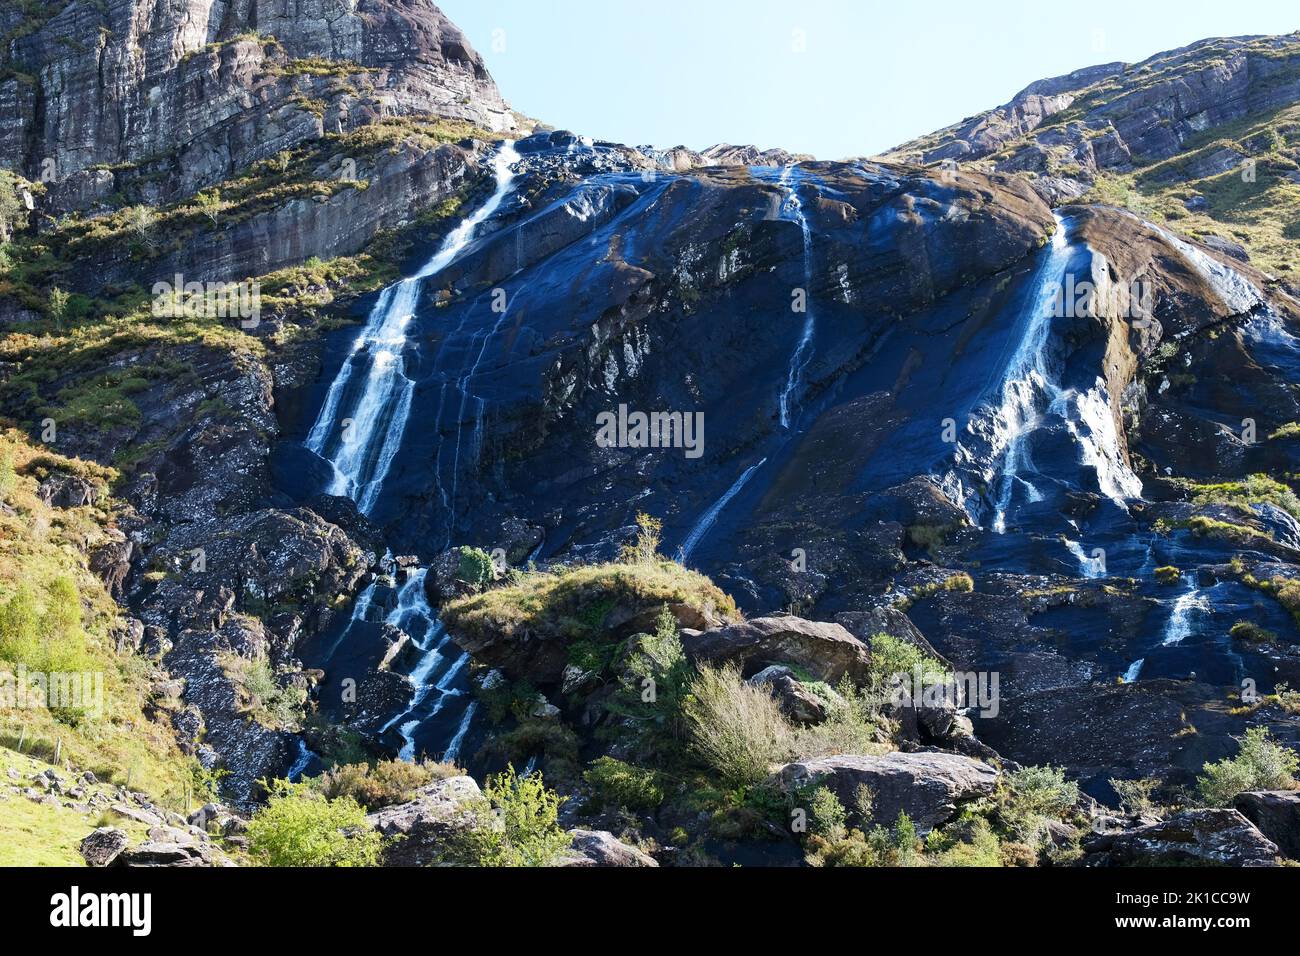 The waterfall at Gleninchaquin Park, County Kerry, Ireland - John Gollop Stock Photo